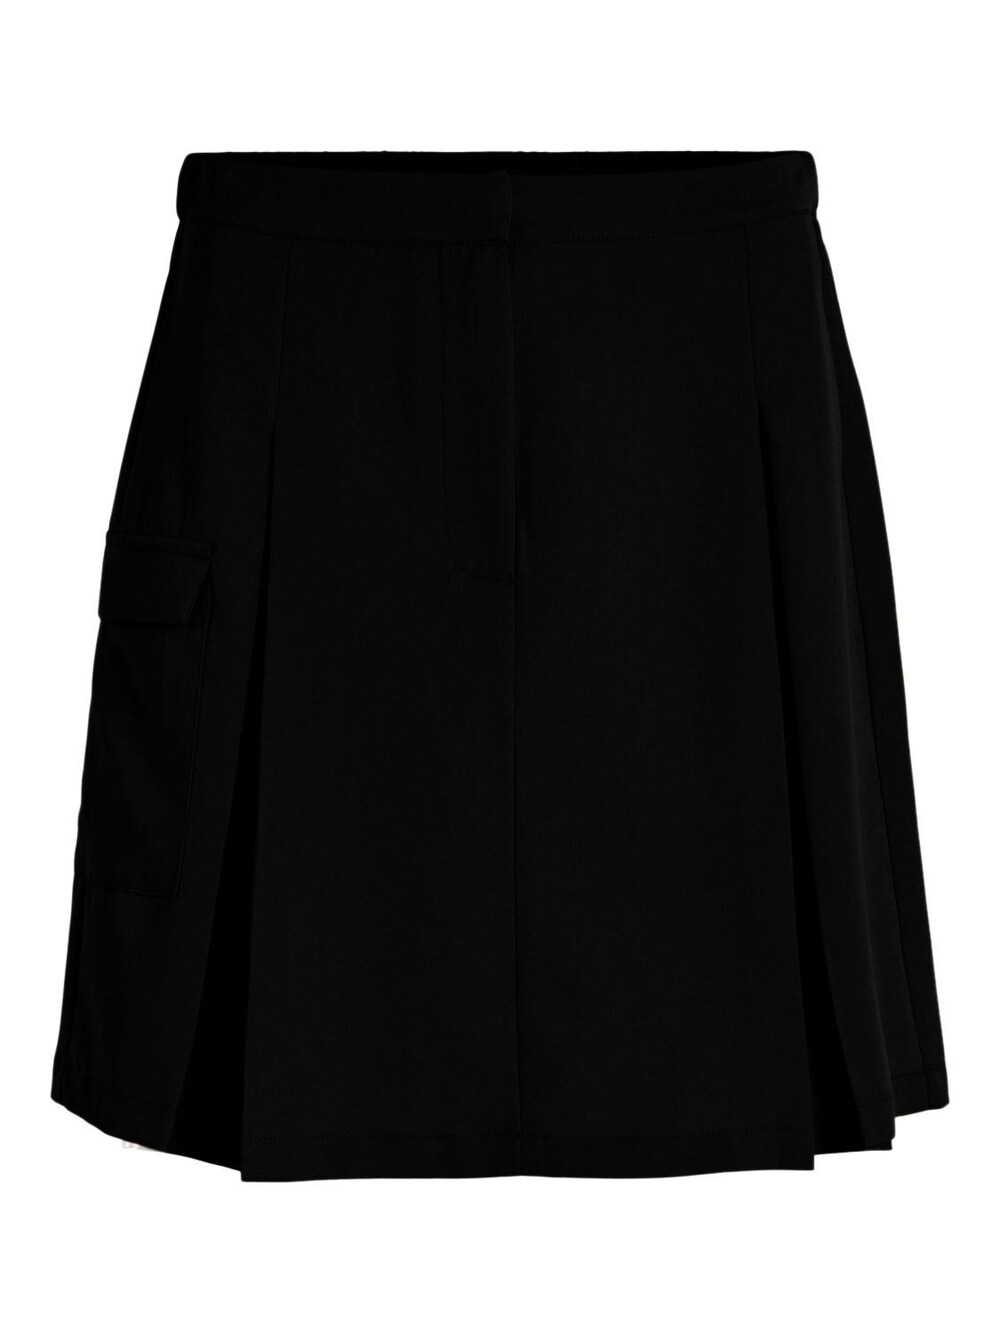 Юбка VILA LEA, черный юбка lea bruni 44y1103